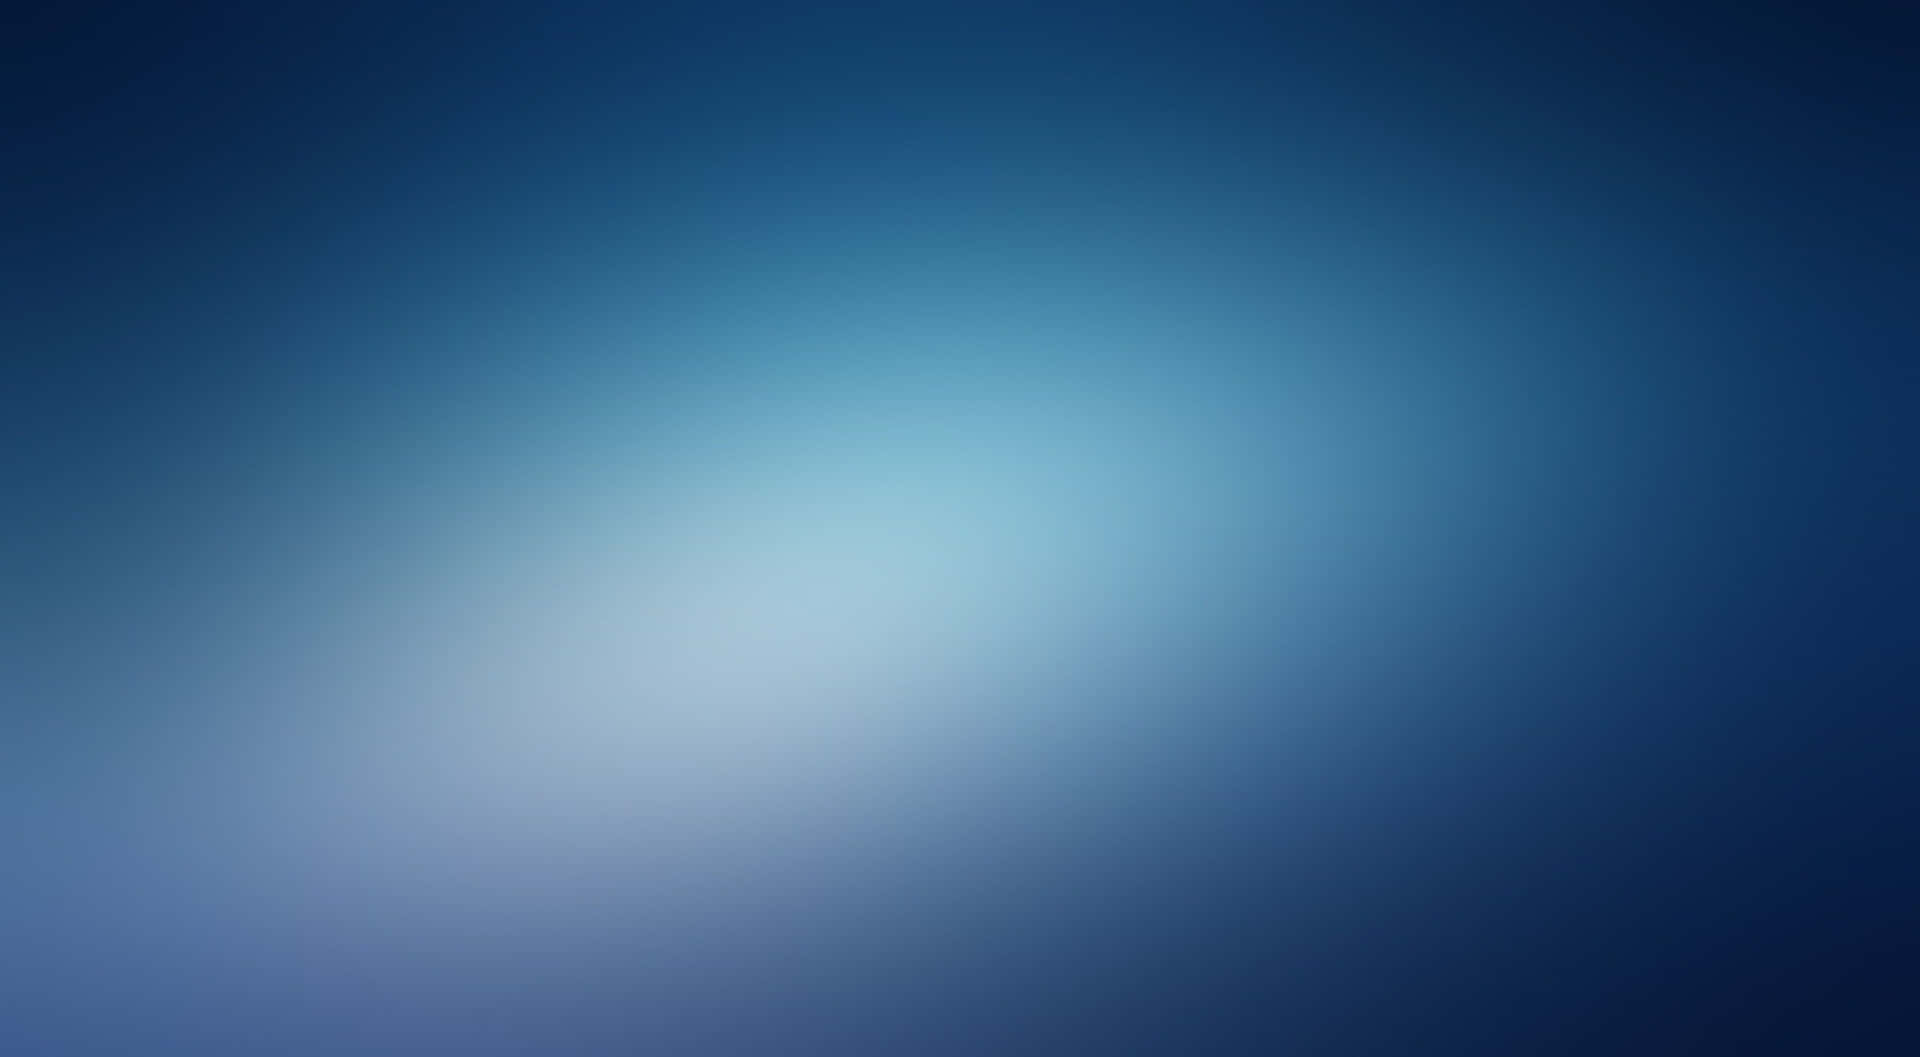 A Blue Blurry Background With A Light Blue Sky